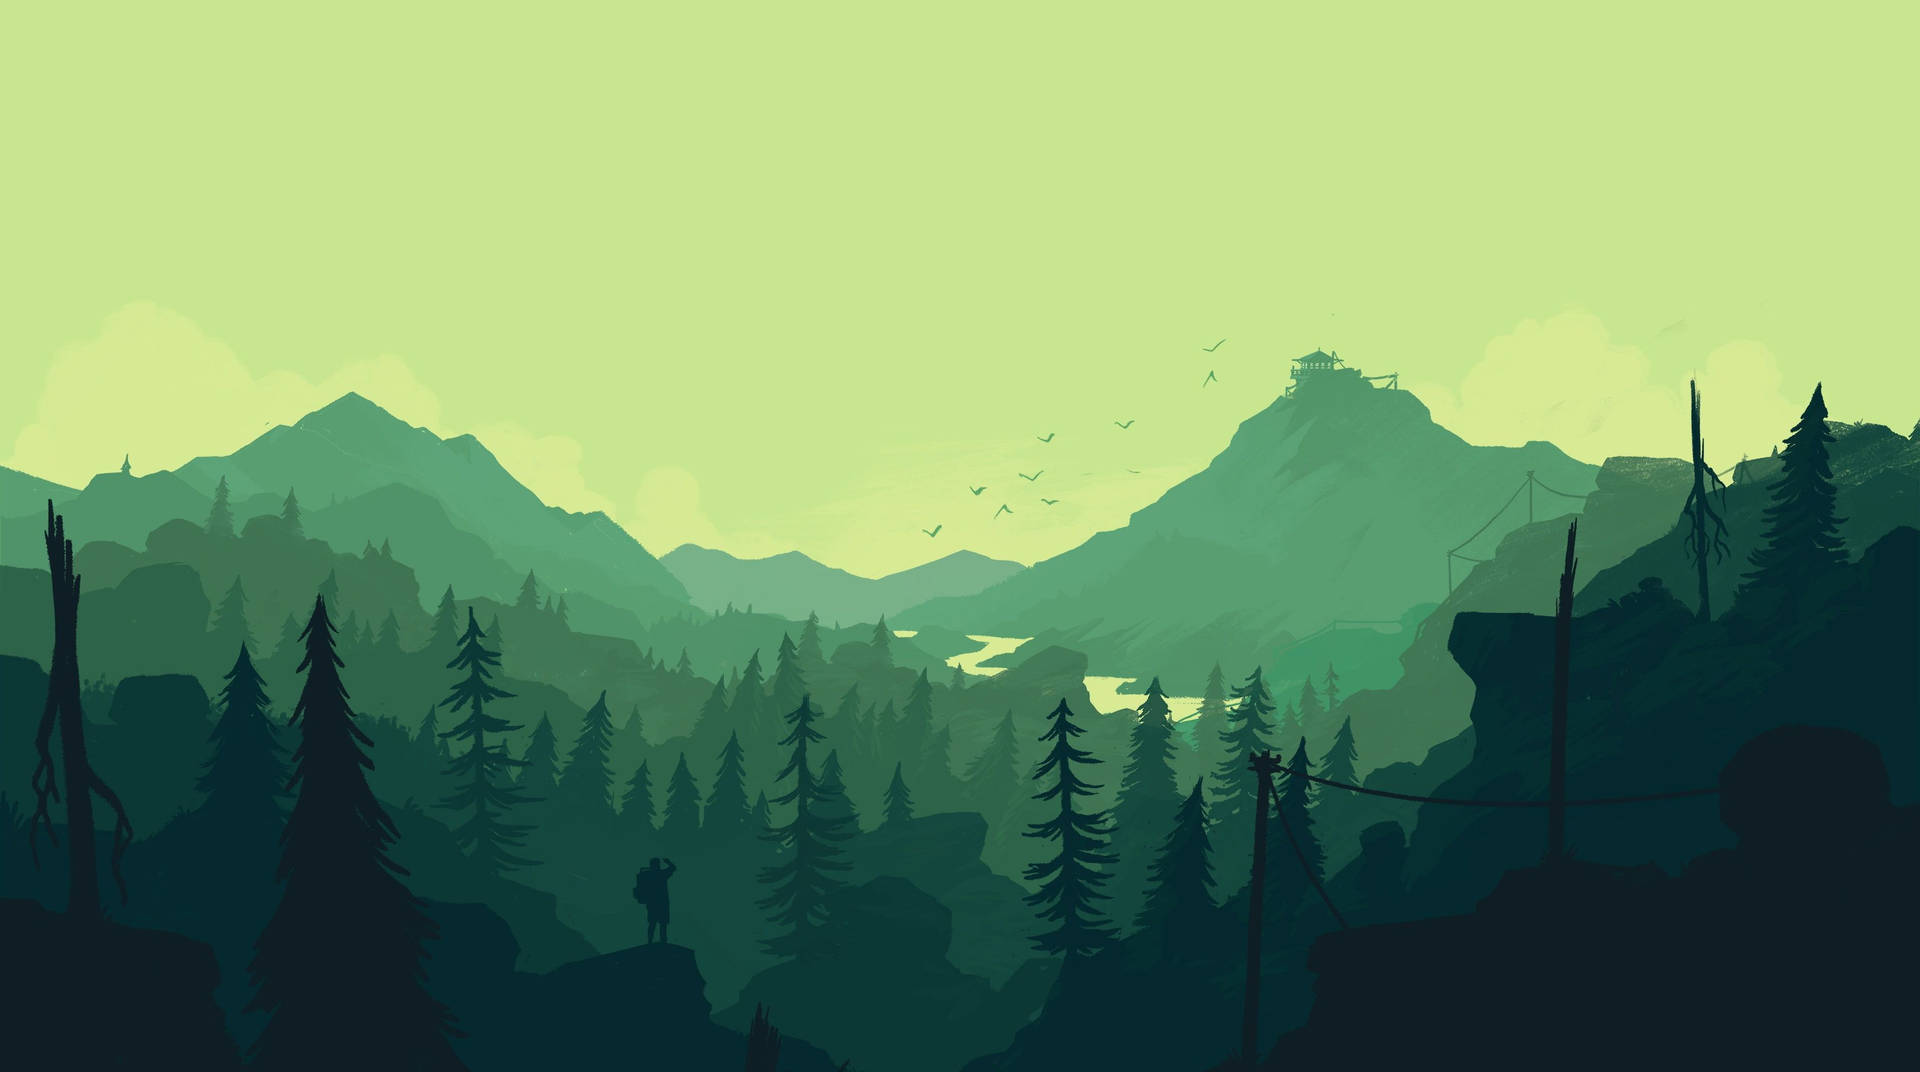 Forest View Digital Art Background